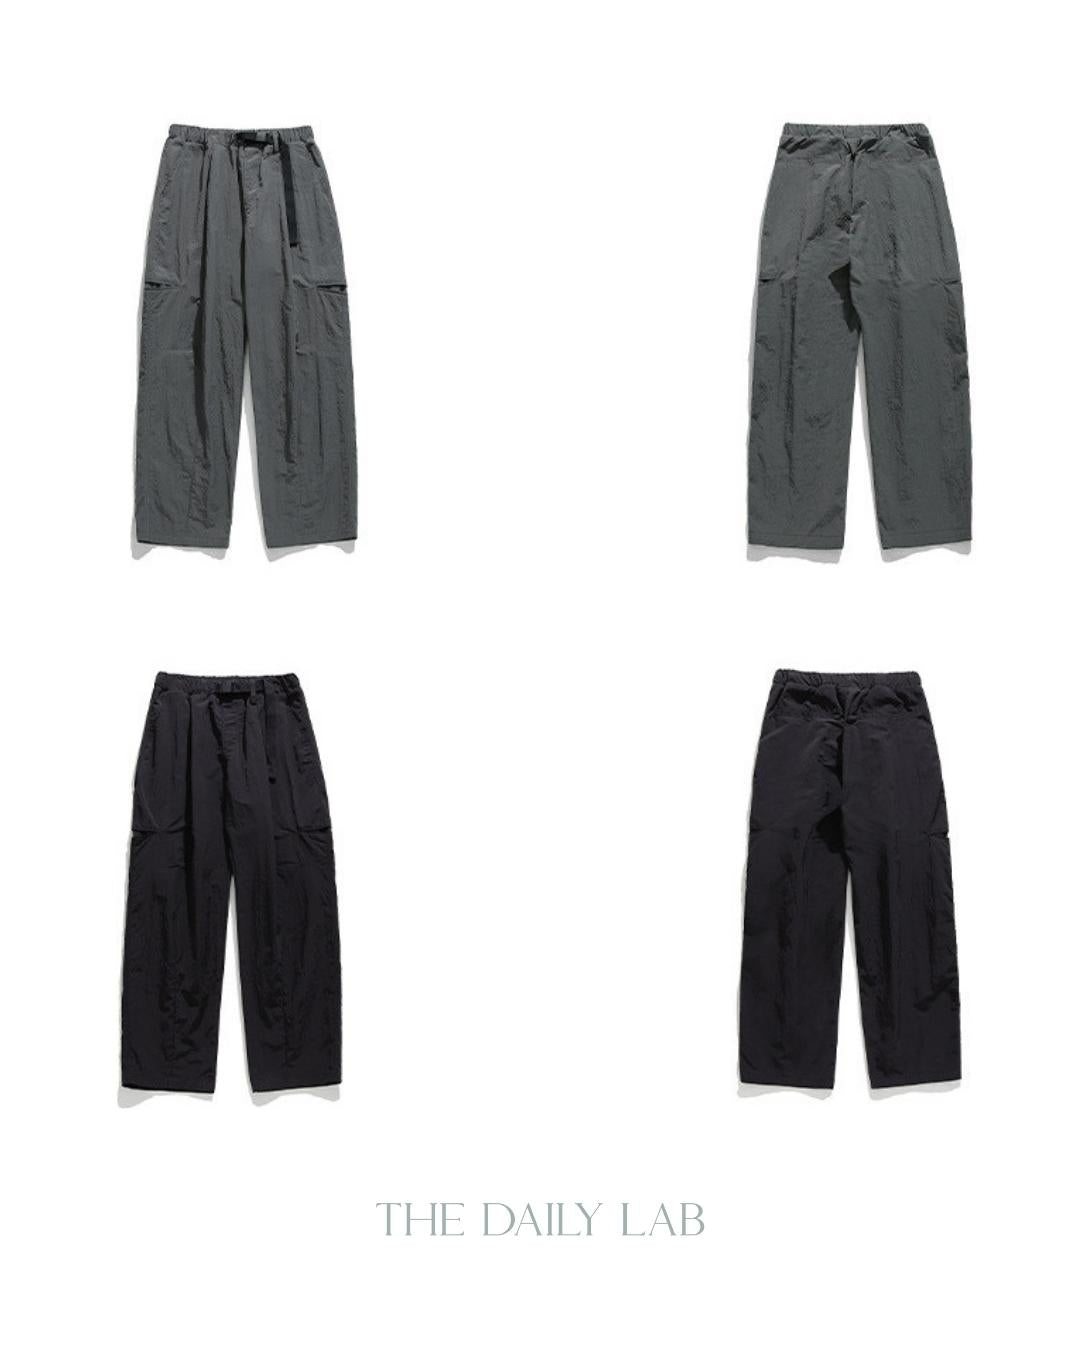 Buckle Outdoor Functional Long Pants in Grey